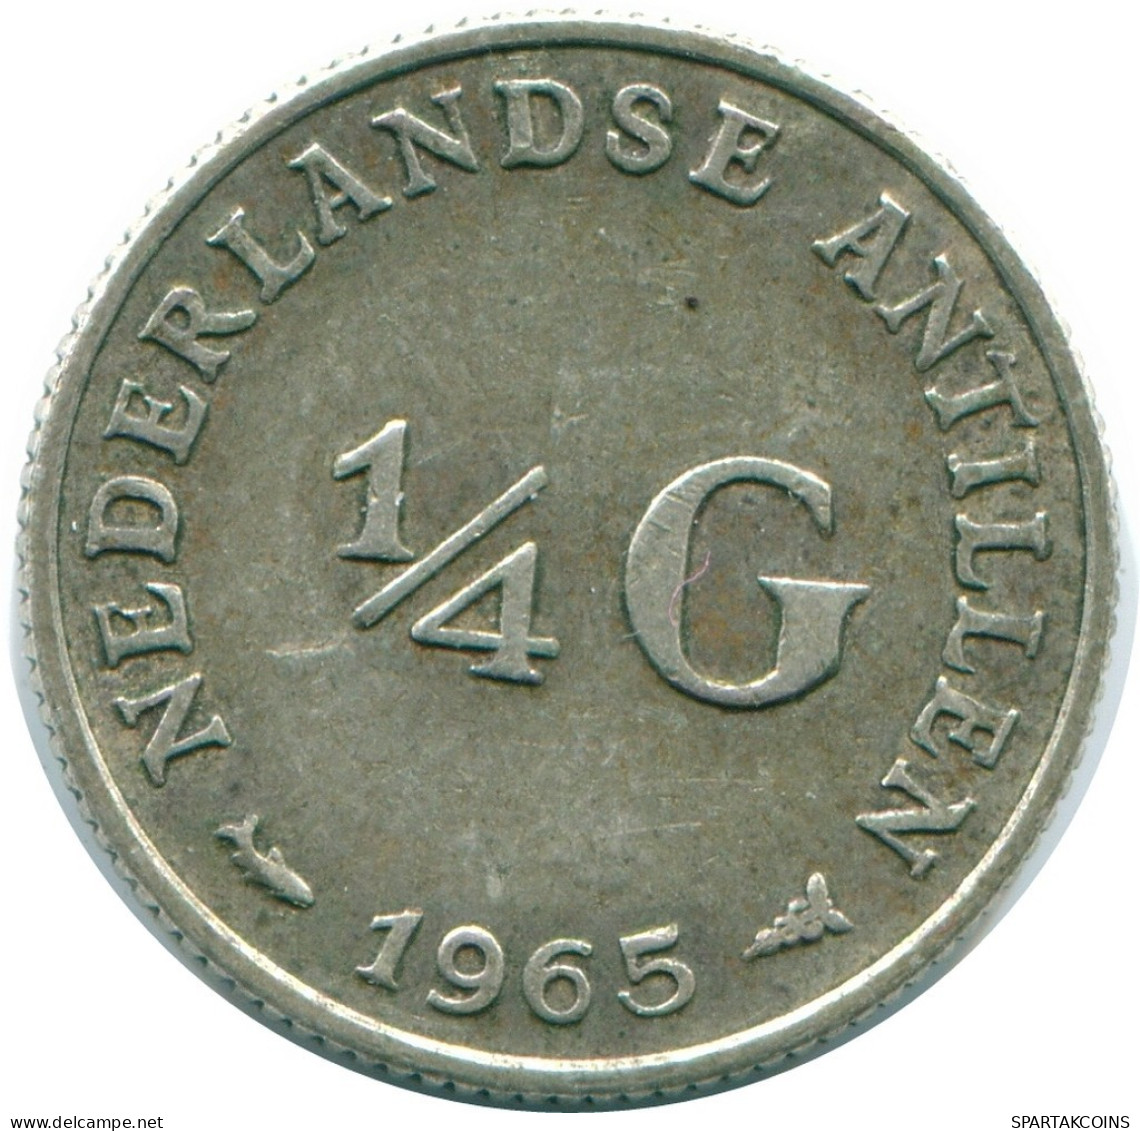 1/4 GULDEN 1965 NIEDERLÄNDISCHE ANTILLEN SILBER Koloniale Münze #NL11382.4.D.A - Netherlands Antilles